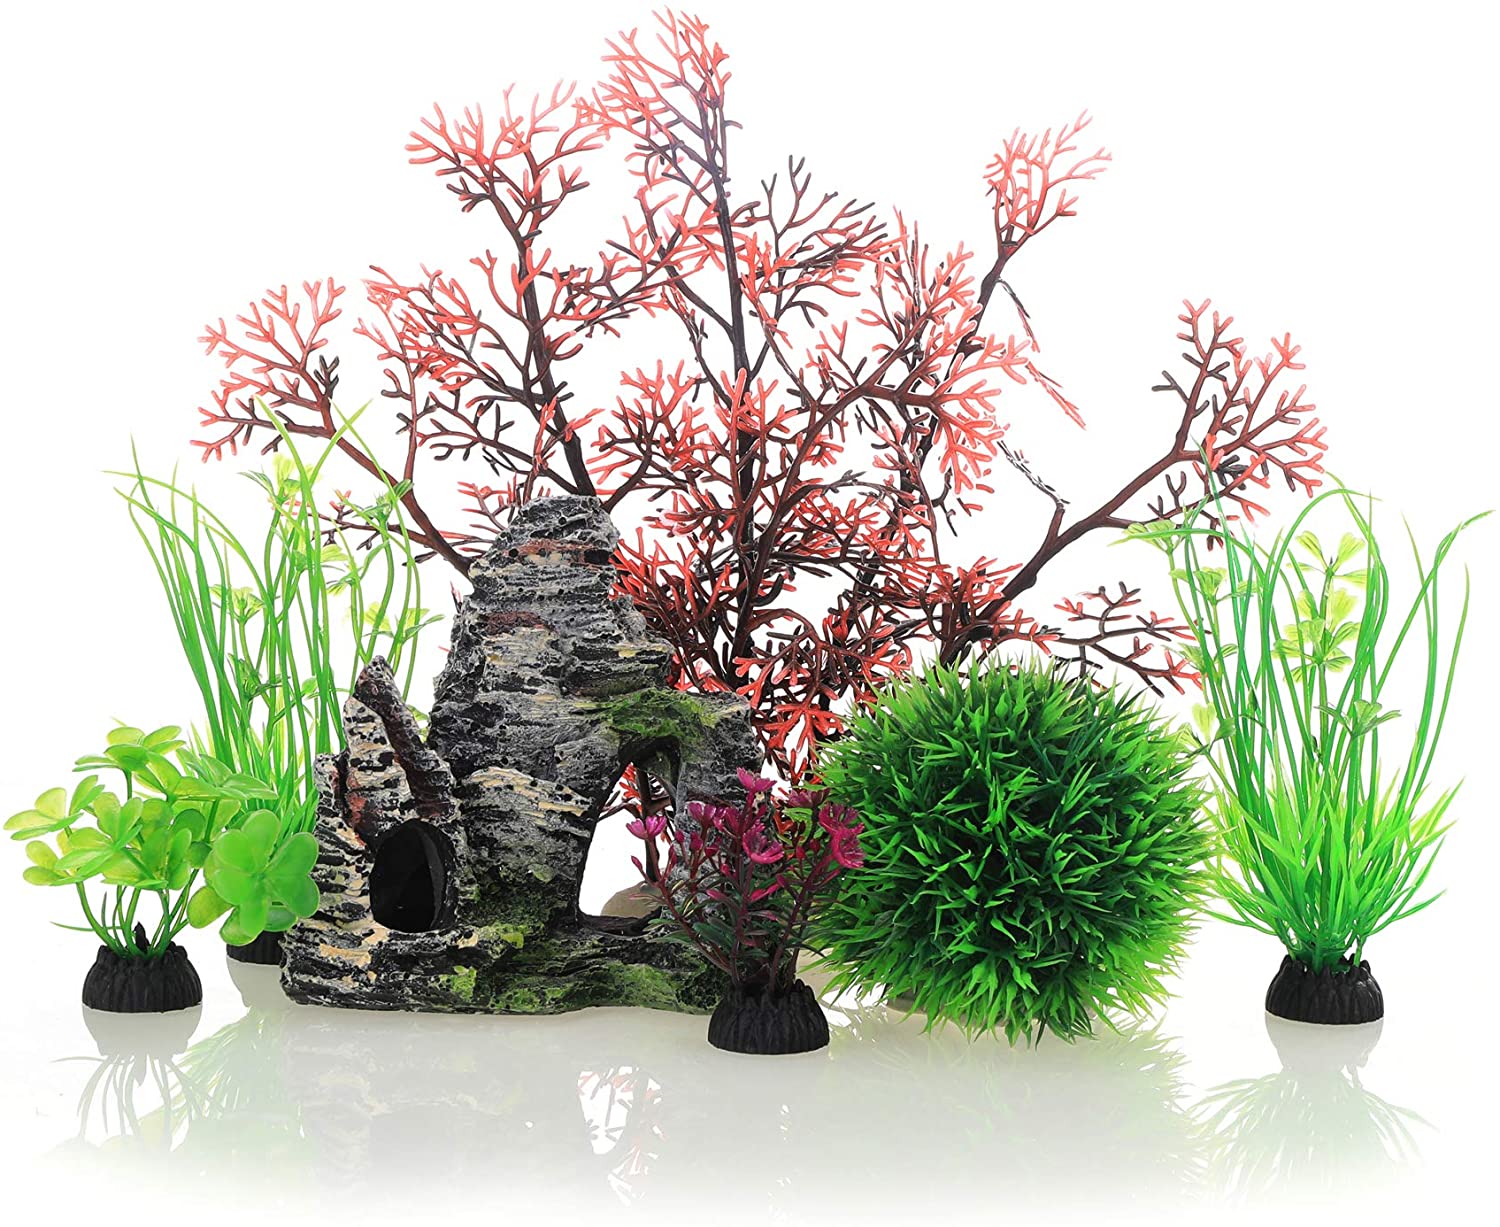 JIH Aquarium Fish Tank Plastic Plants and Cave Rock Decorations (CU89Red-7)